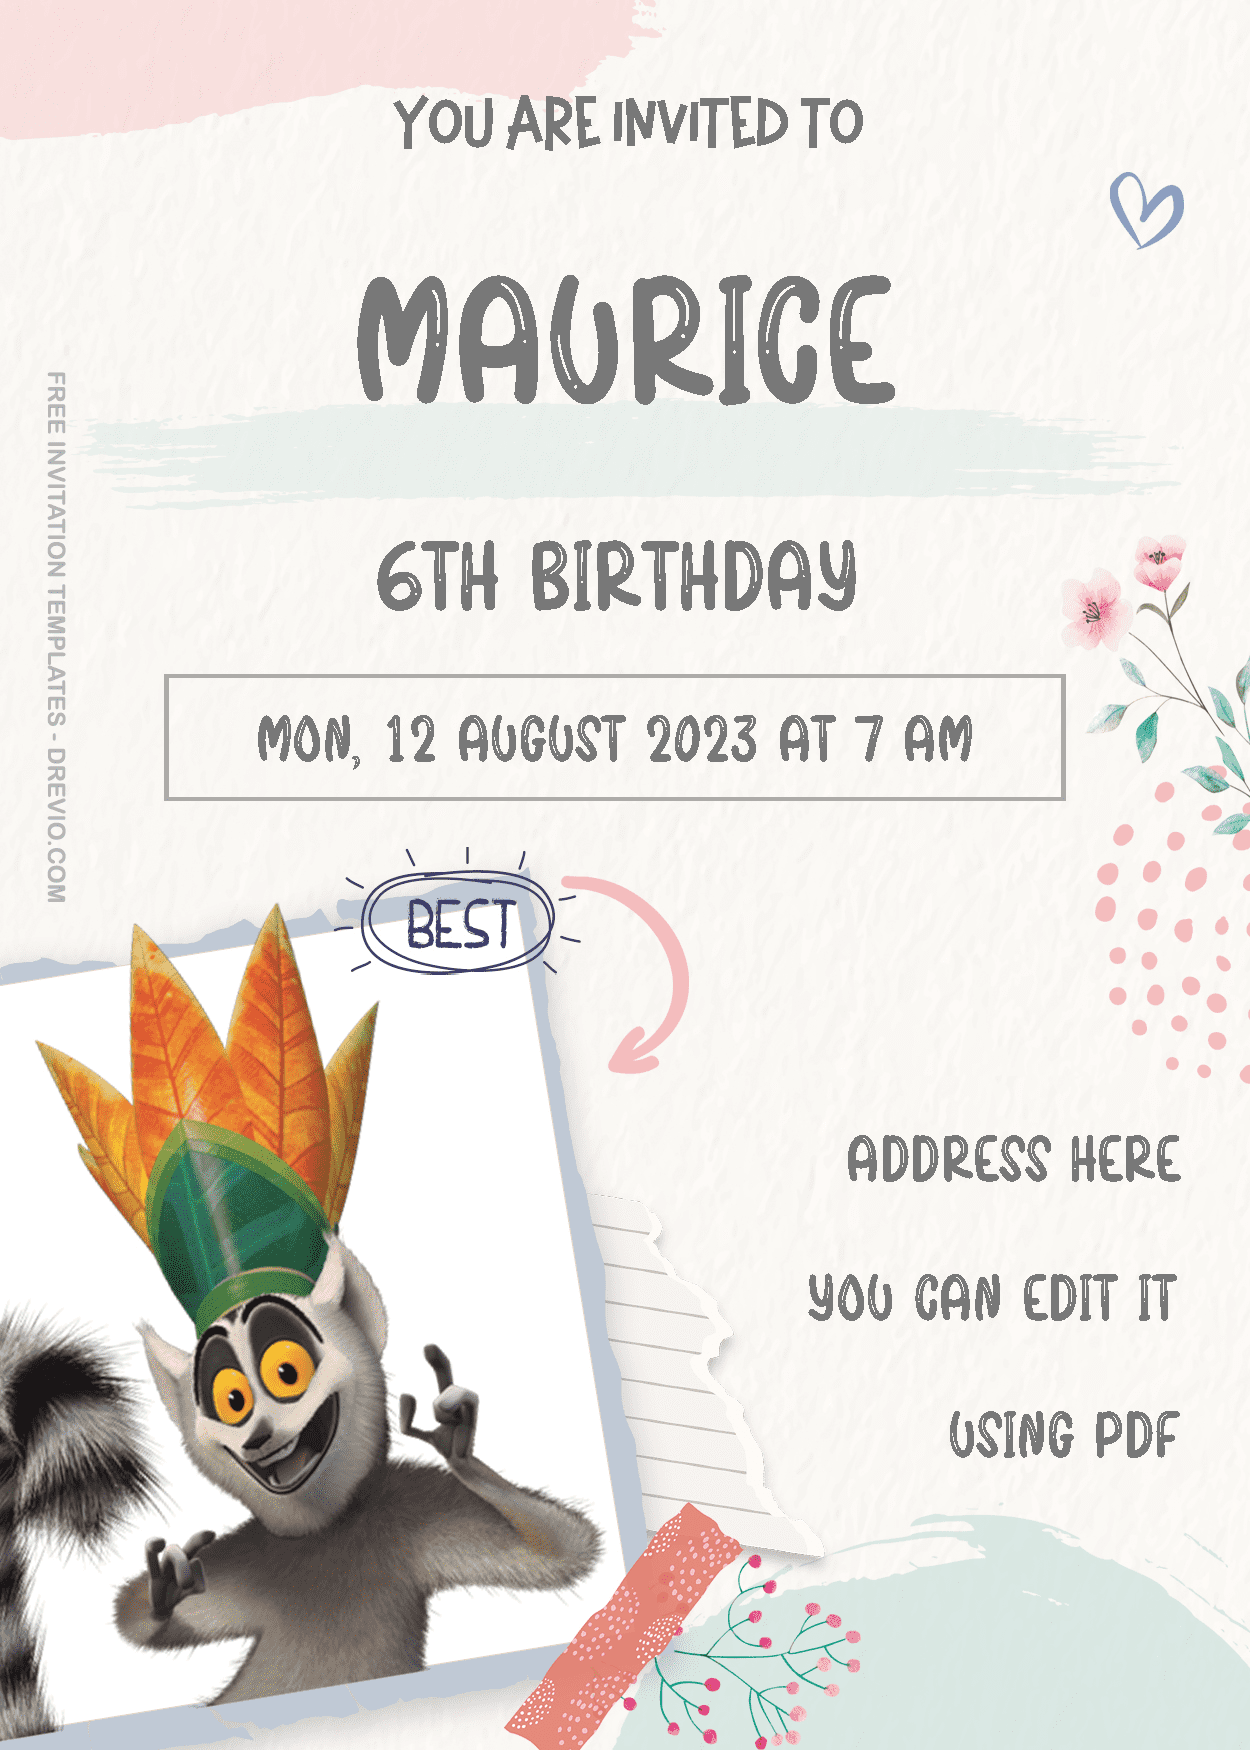 ( Free Editable PDF ) Madagascar Birthday Invitation Templates Three